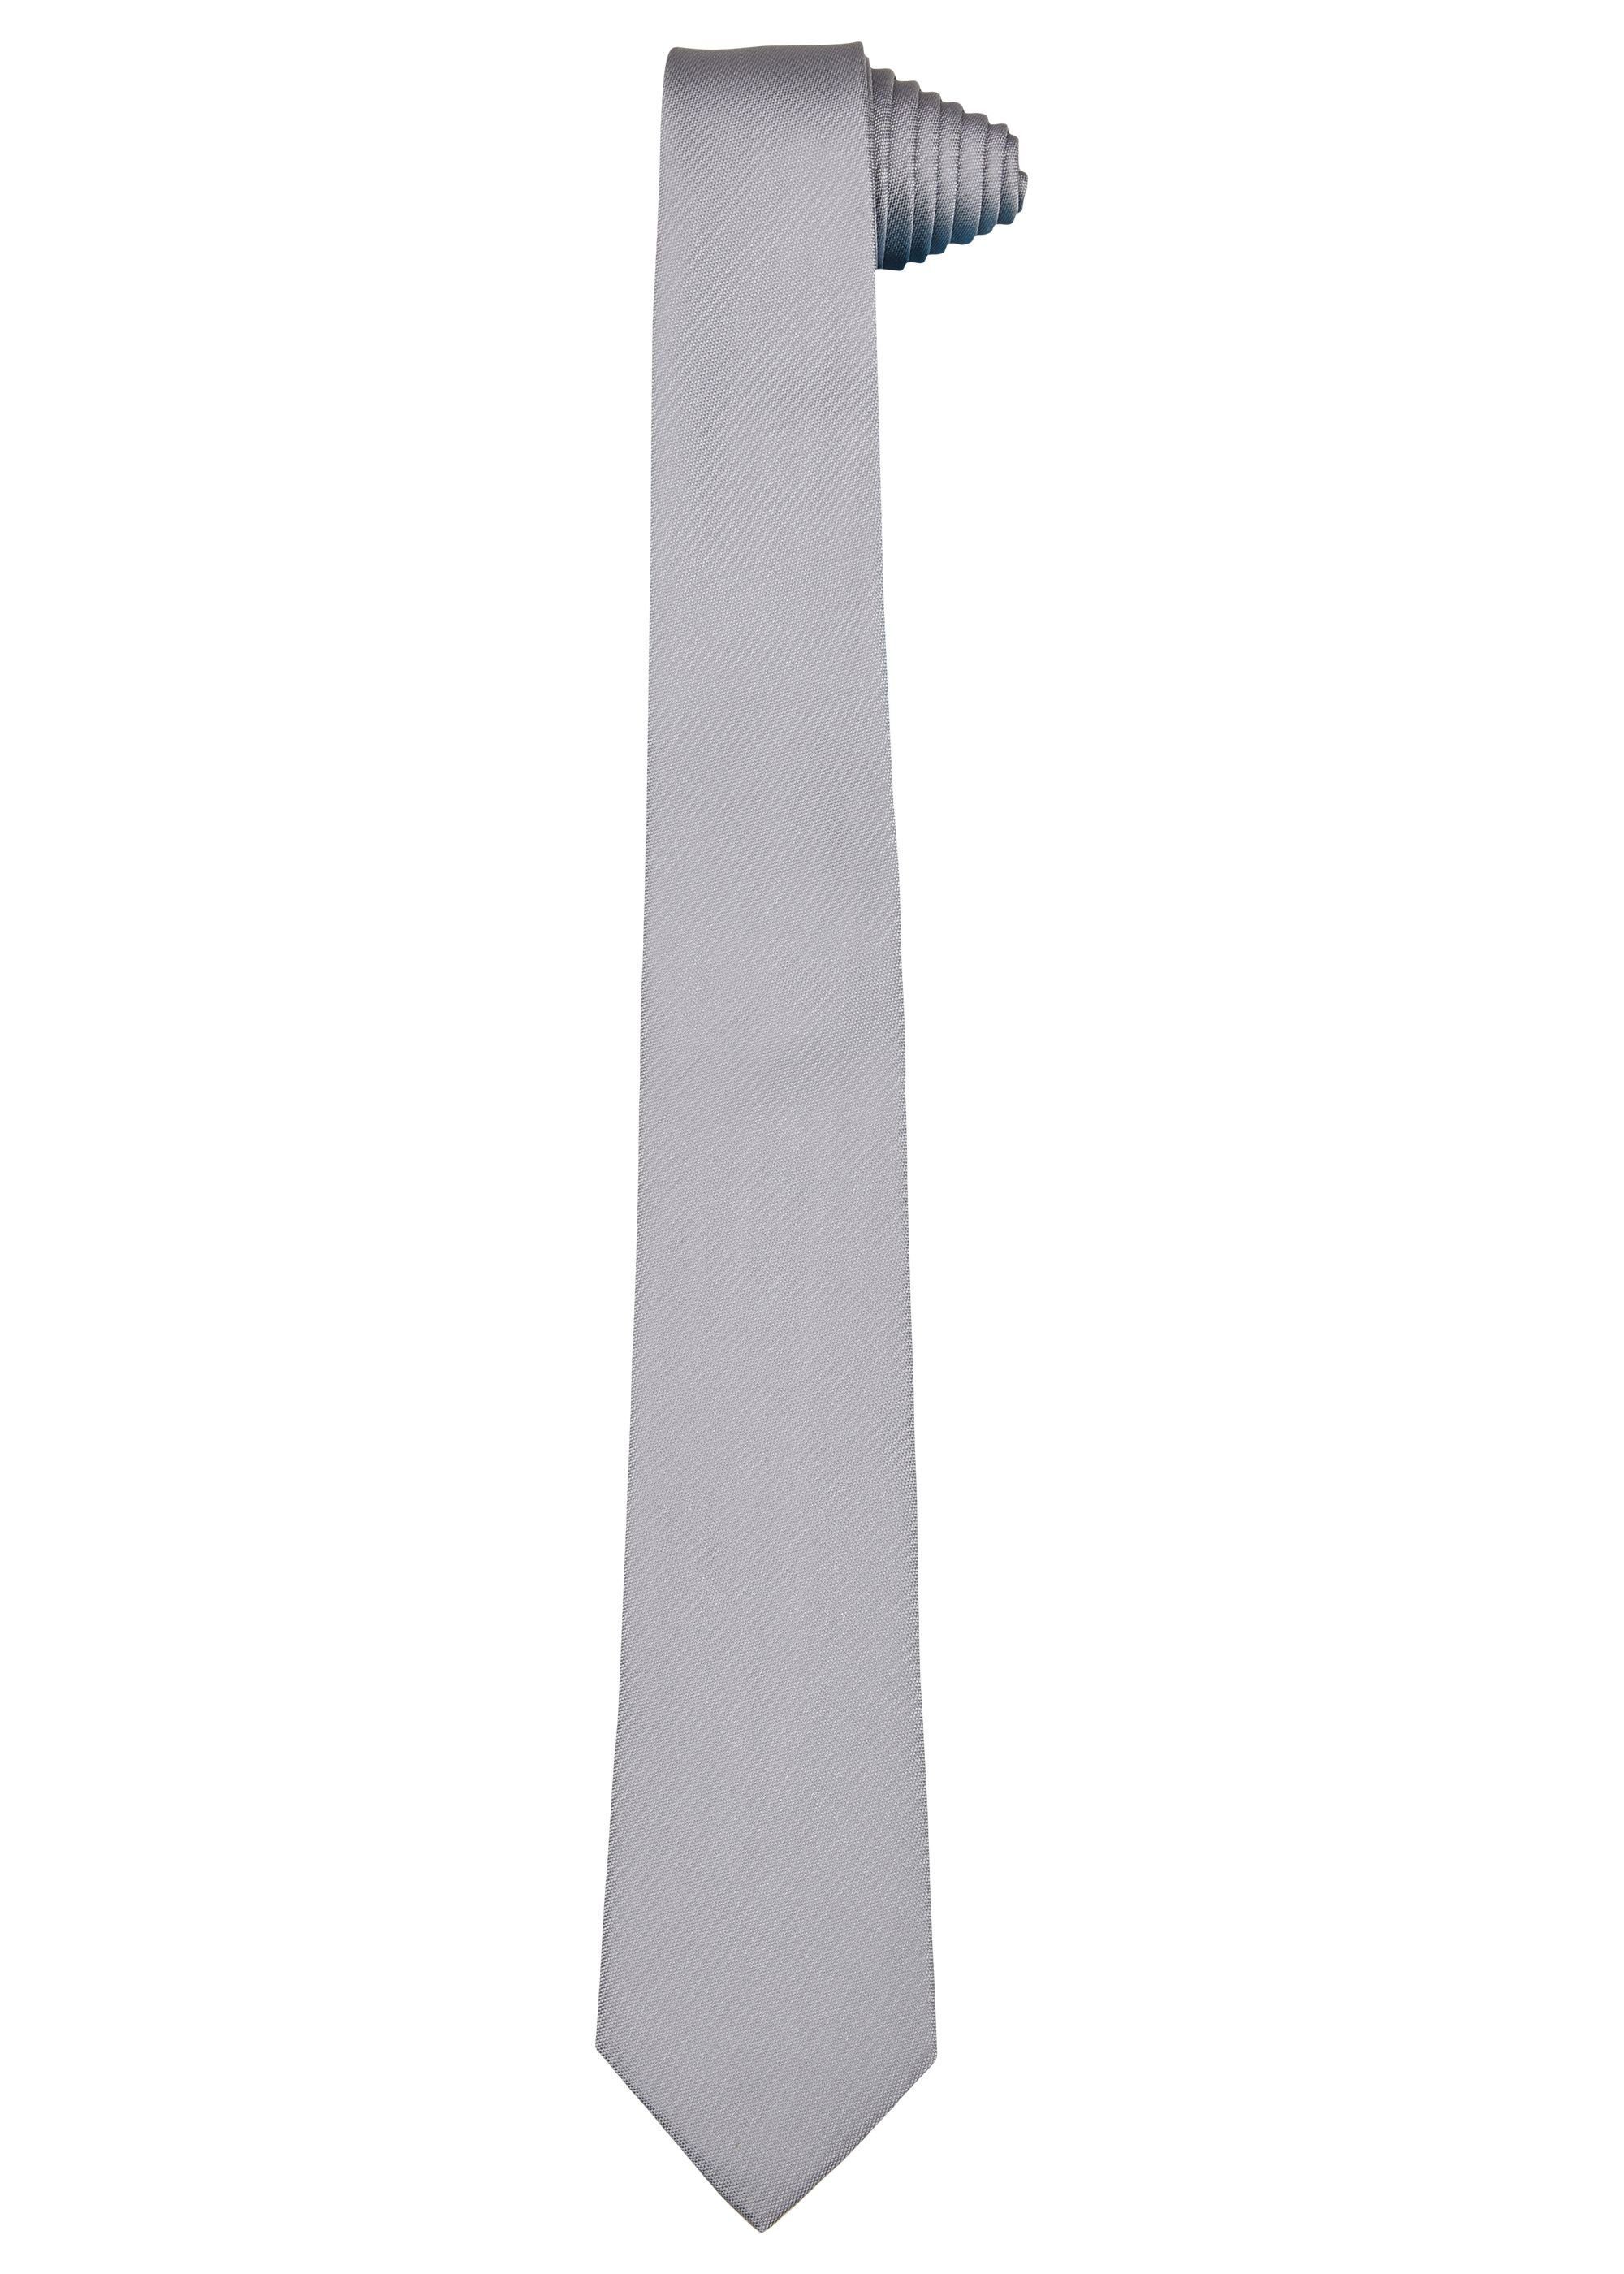 HECHTER PARIS Krawatte aus reiner Seide lightgrey